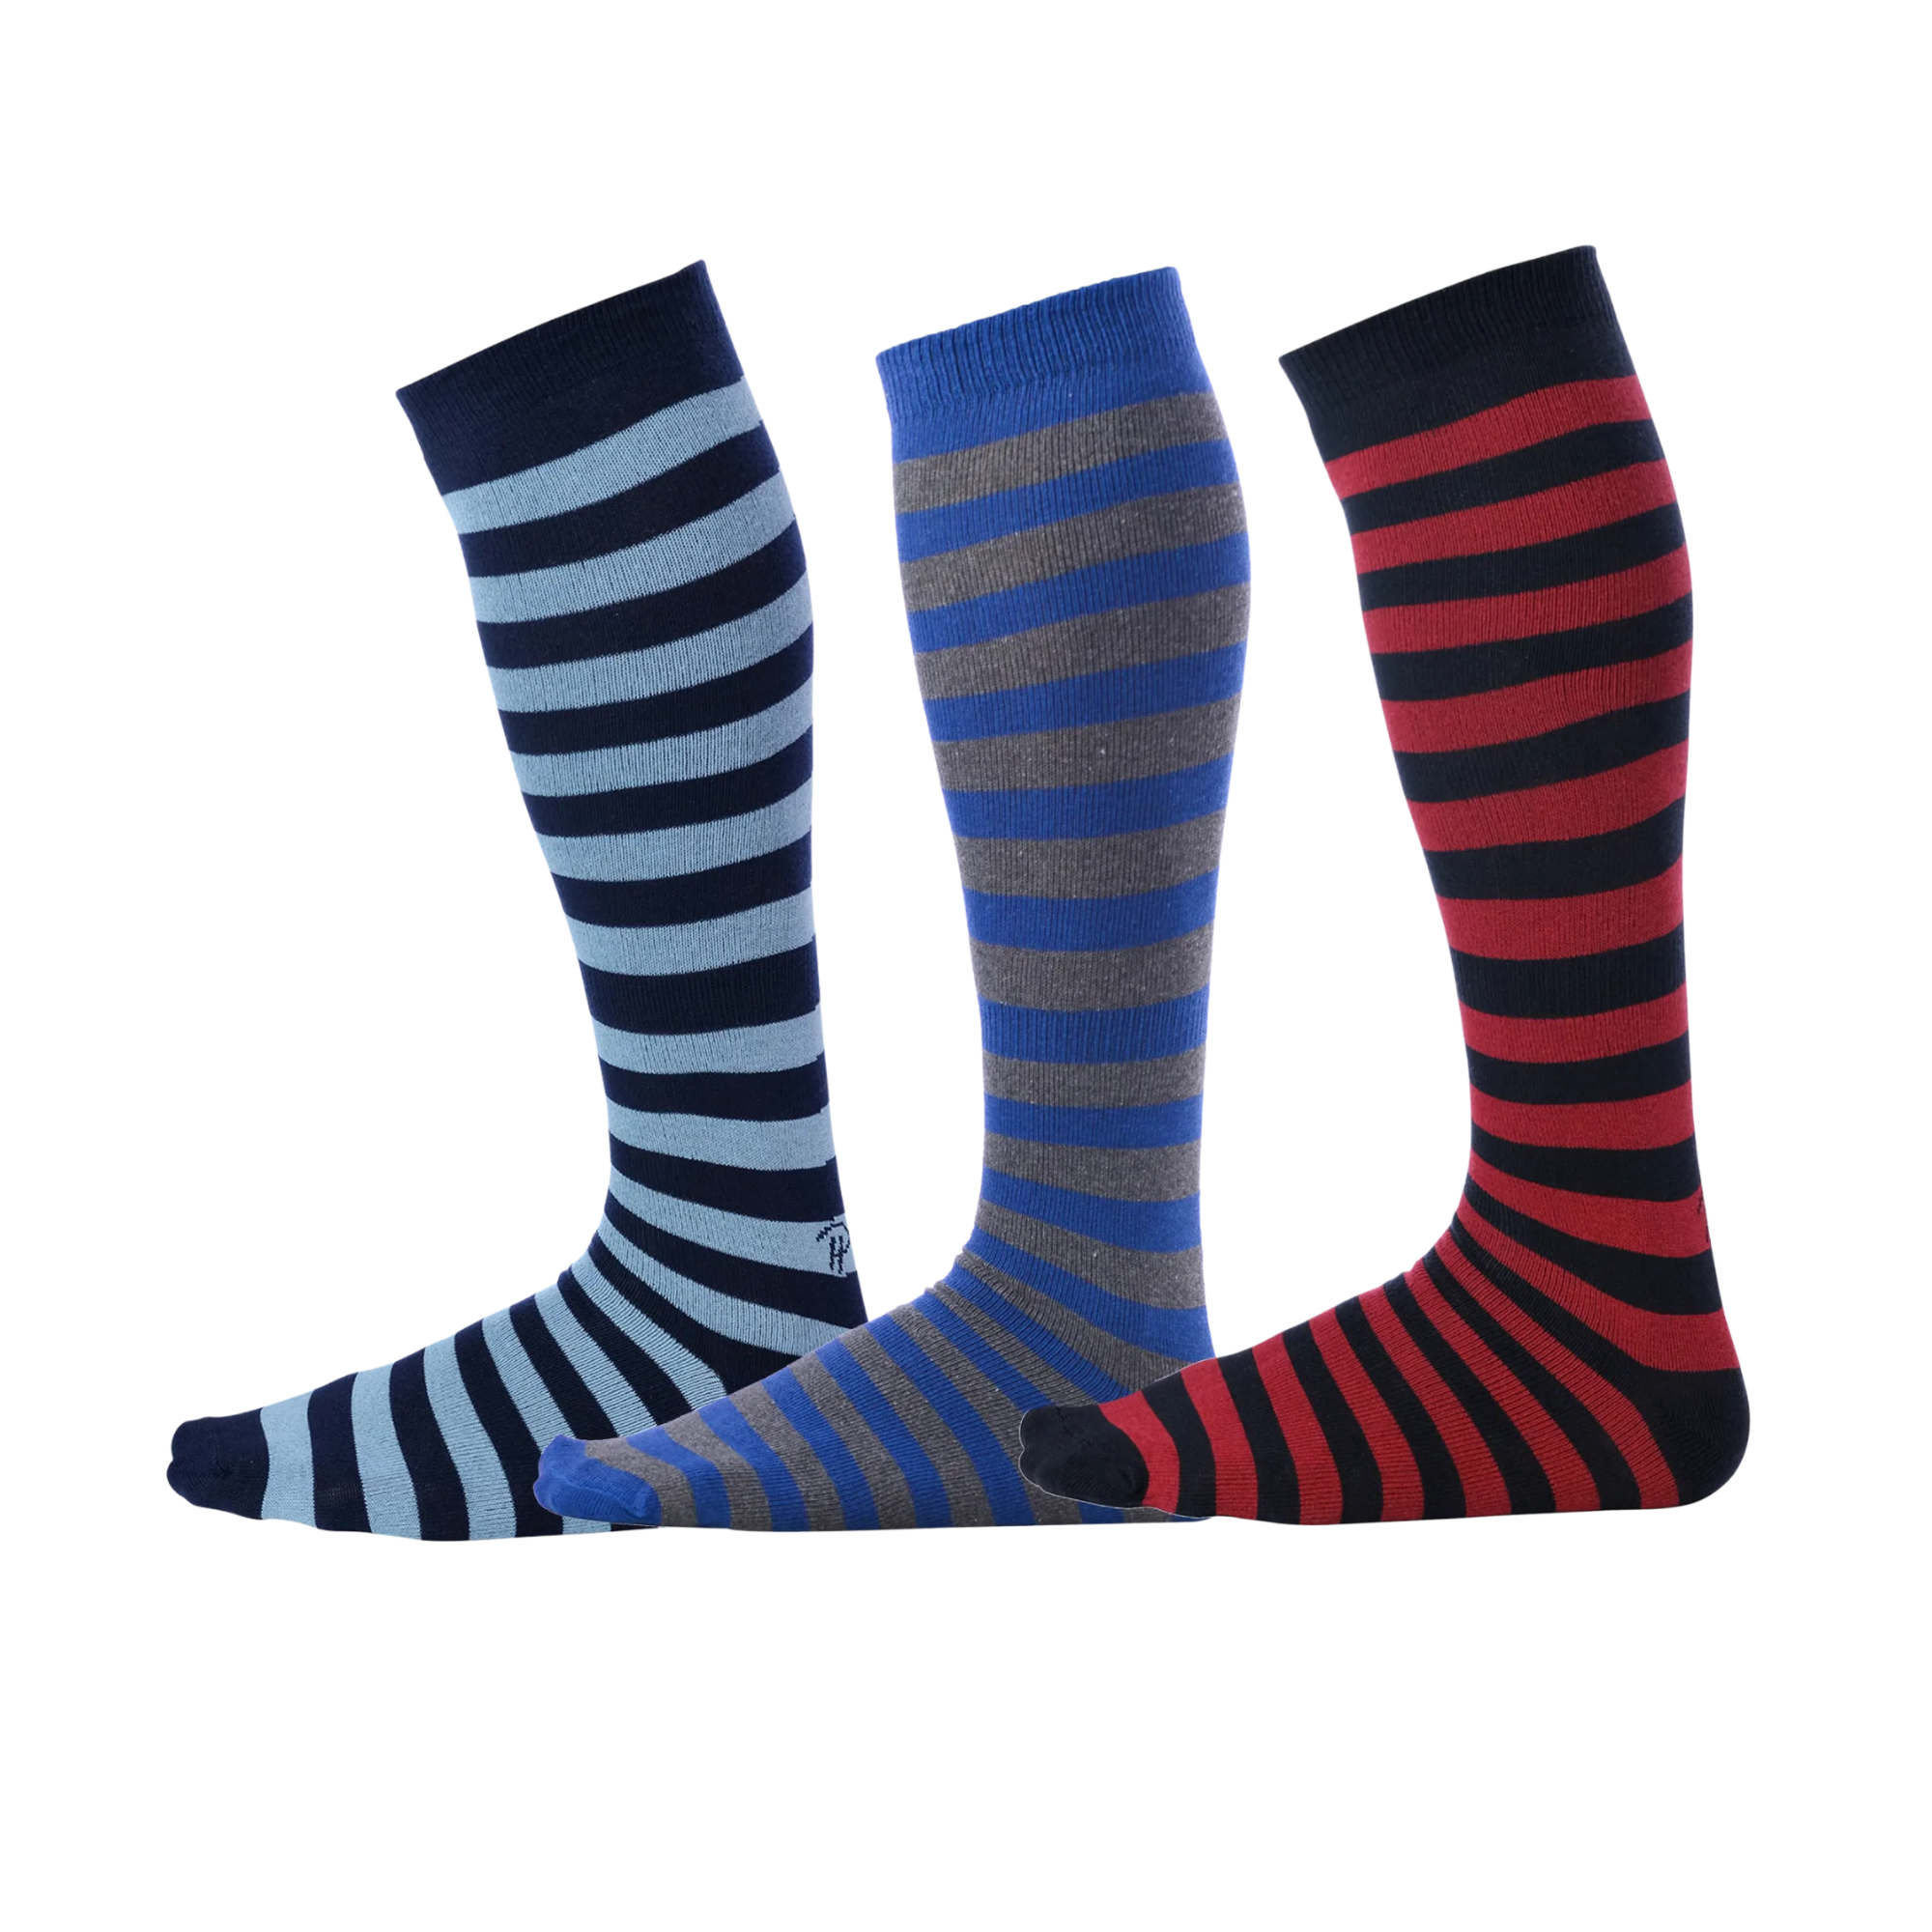 light blue and navy blue striped dress socks, grey and blue striped dress socks, black and red striped dress socks